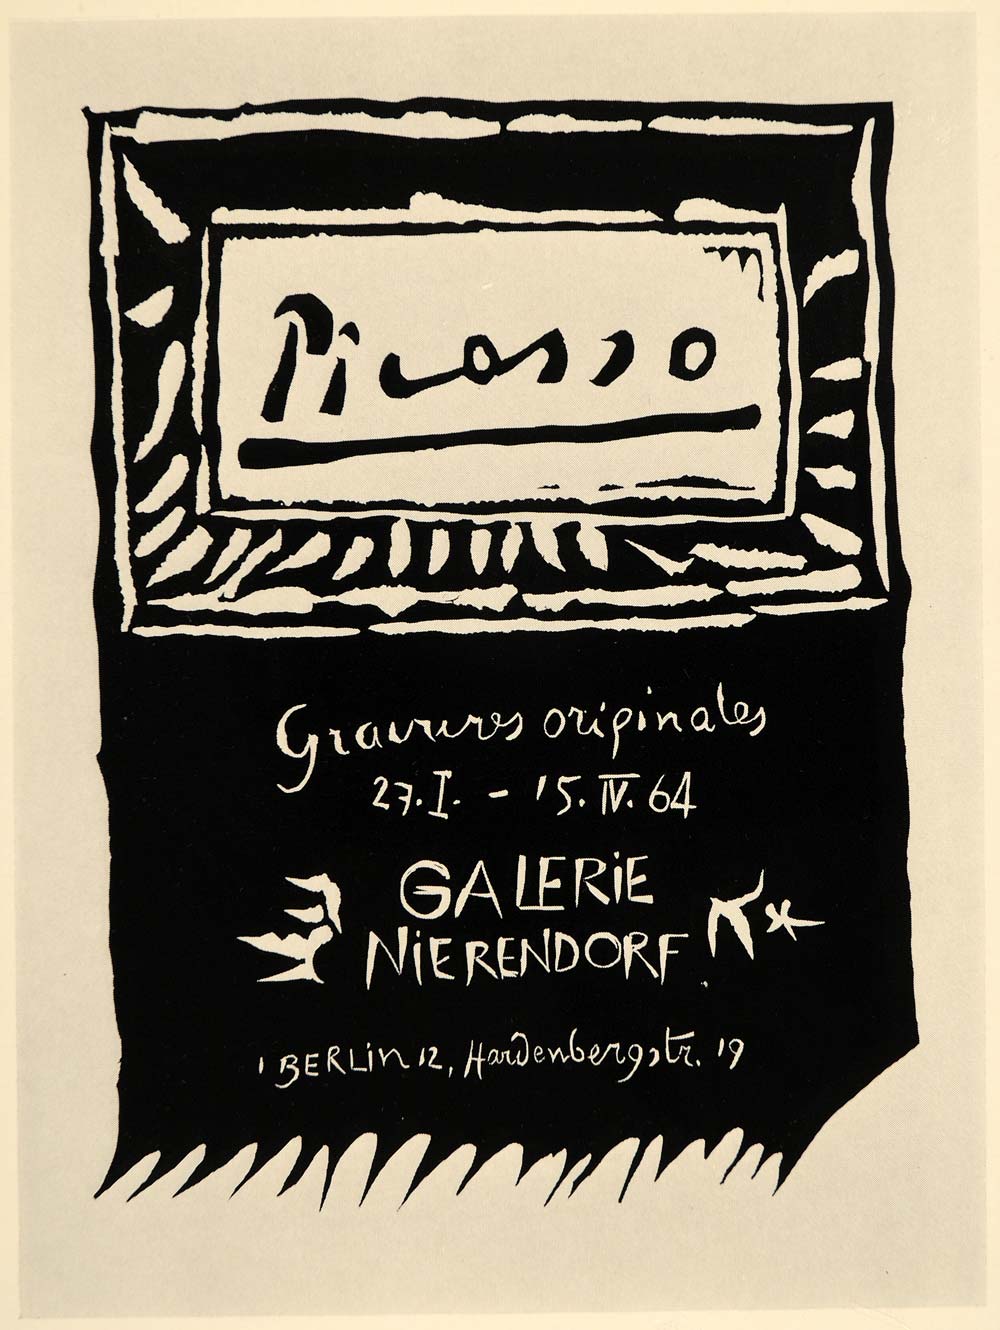 1971 Print Picasso Art Galerie Nierendorf Berlin Poster - ORIGINAL PIC3